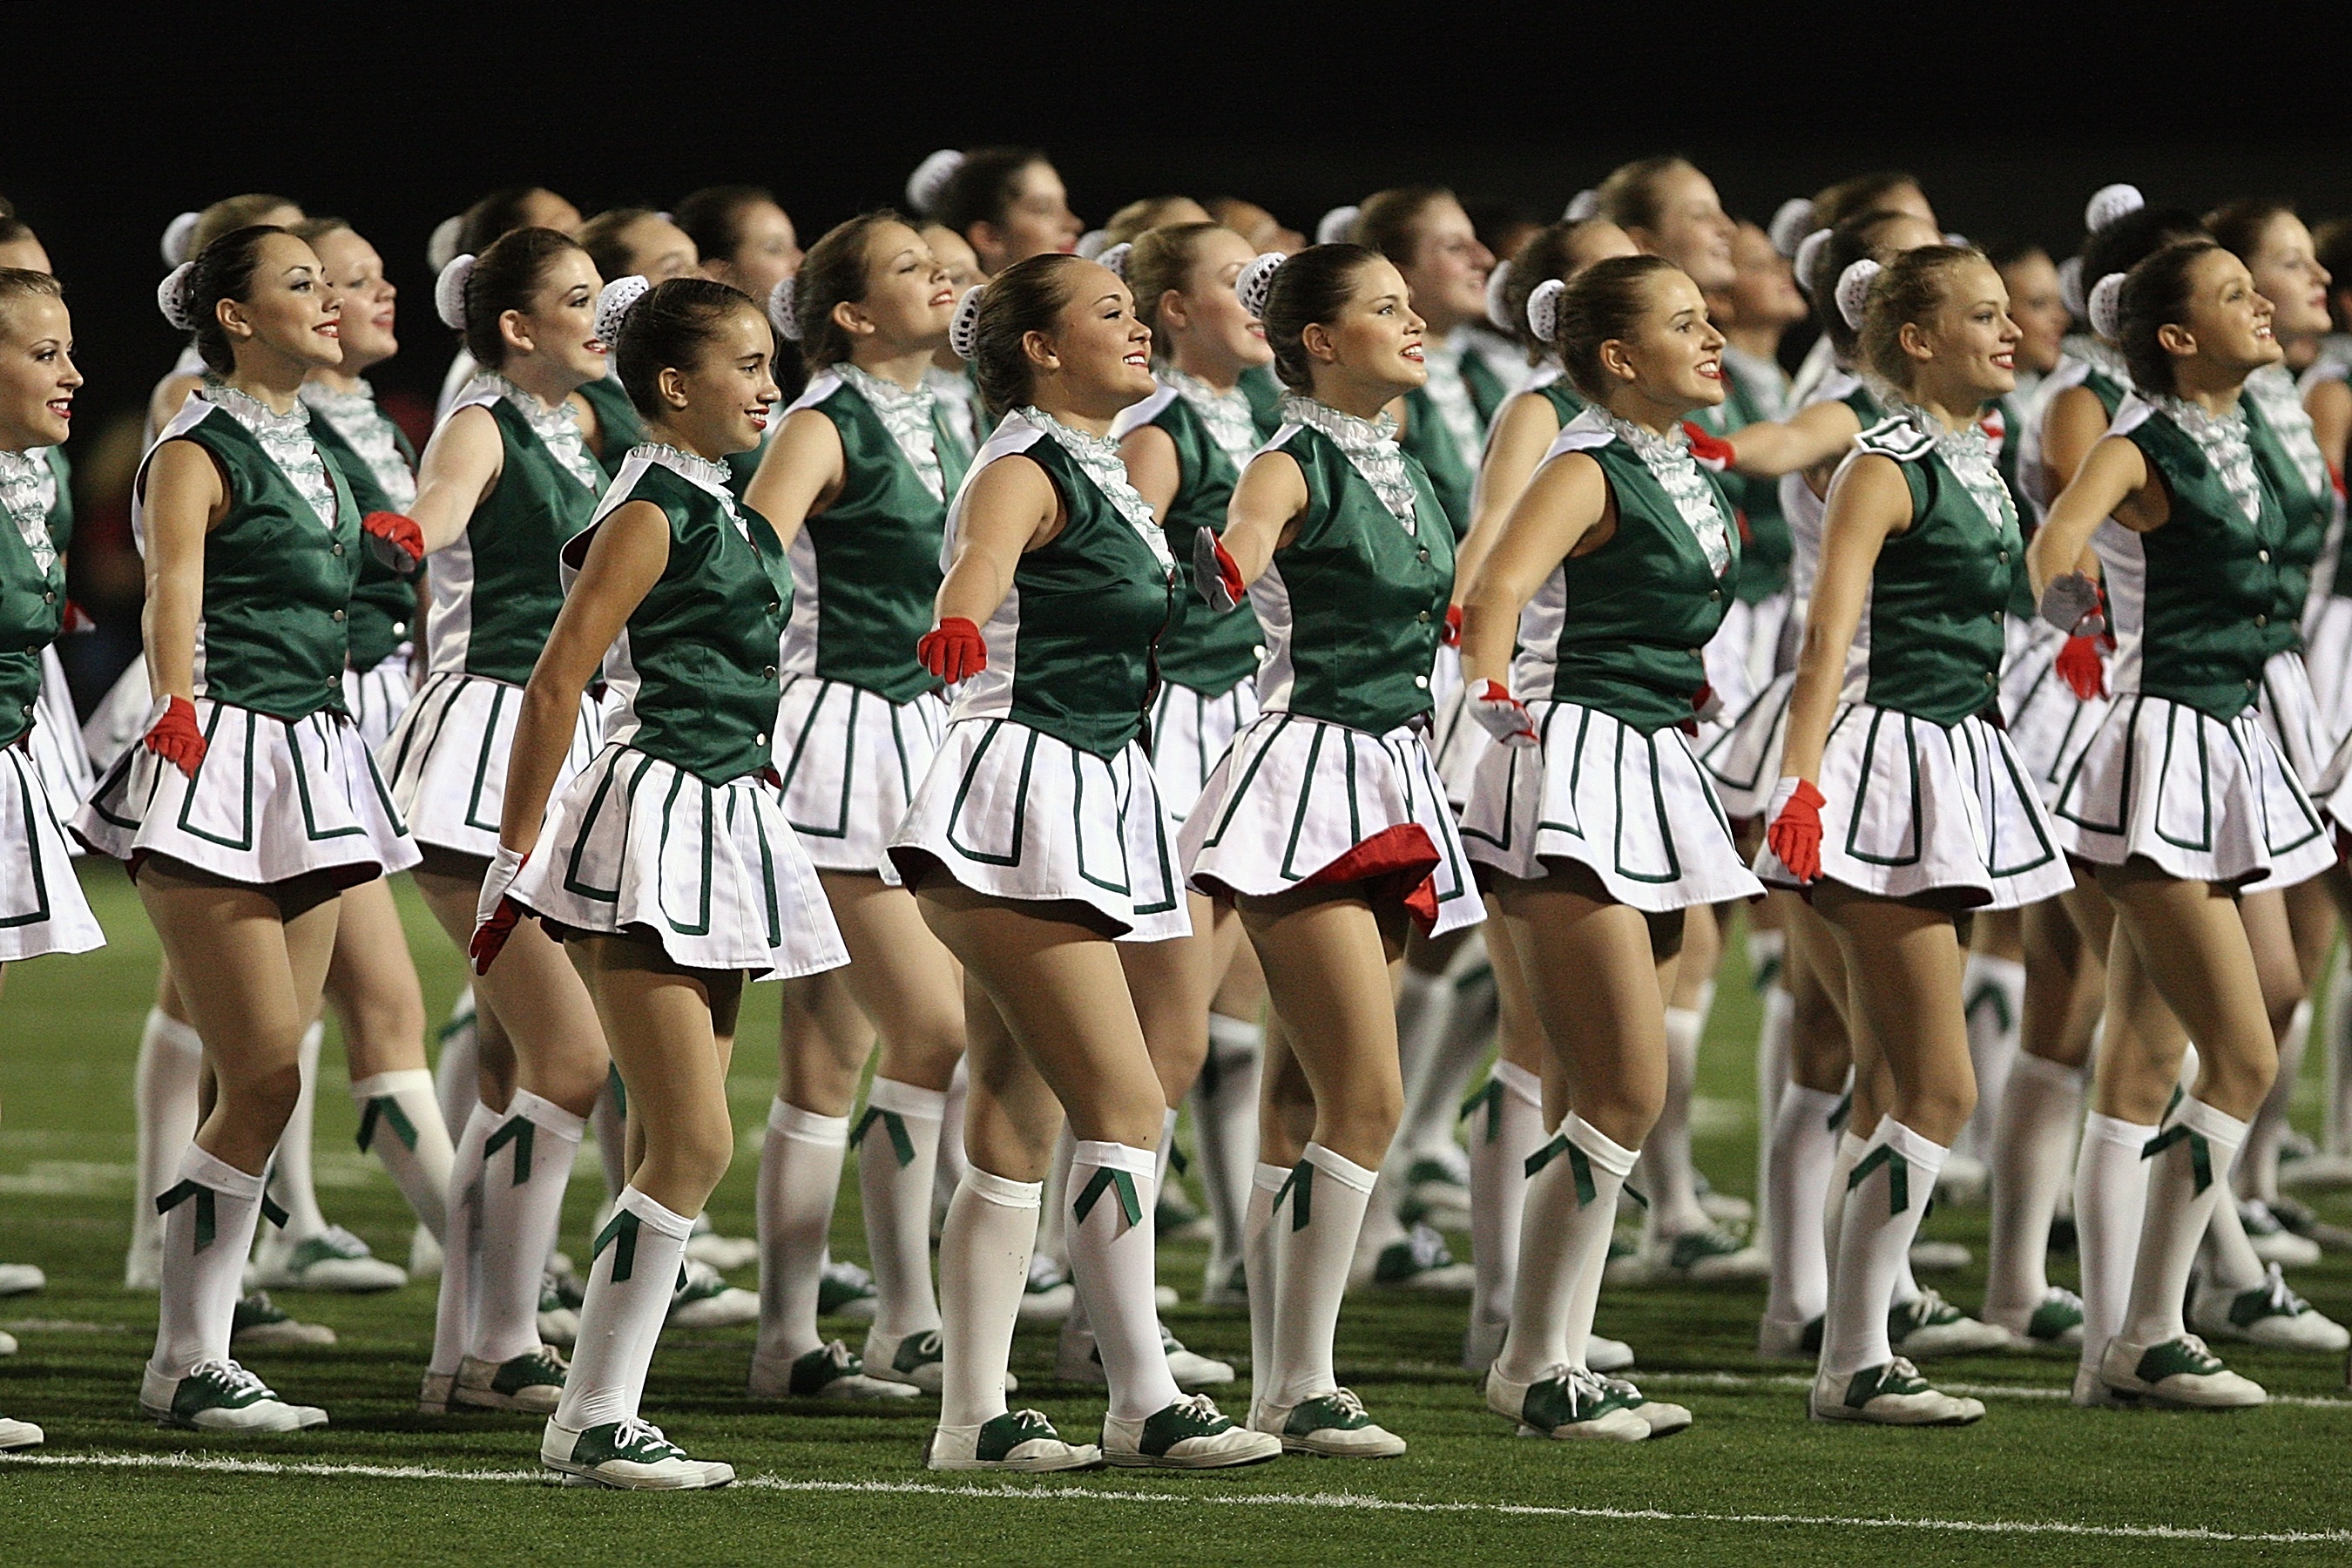 Group of cheerleader, Green field, Free stock photo, 2700x1800 HD Desktop